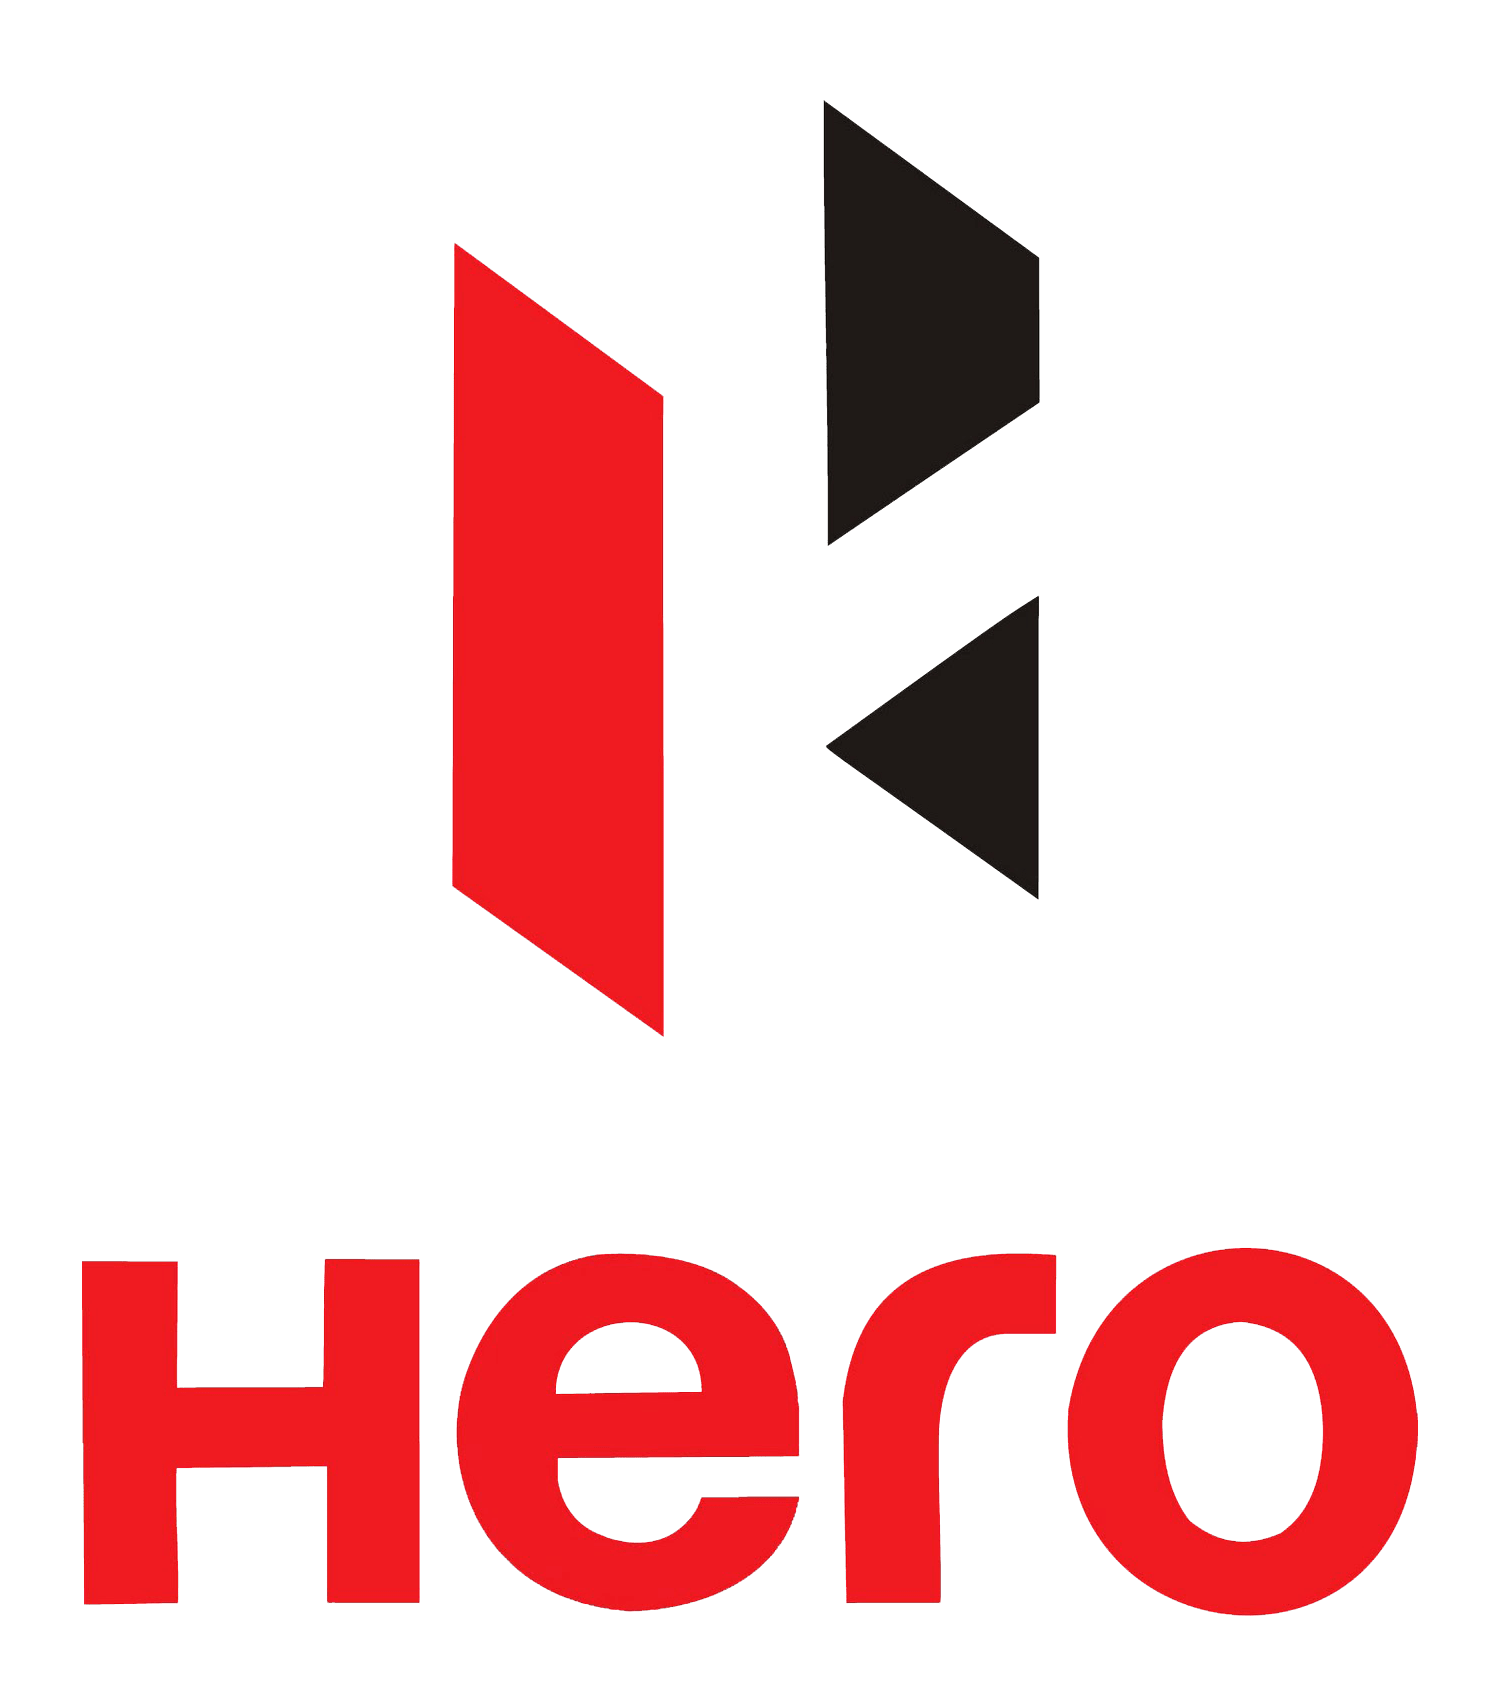 Hero Karizma logo stickers in custom colors and sizes